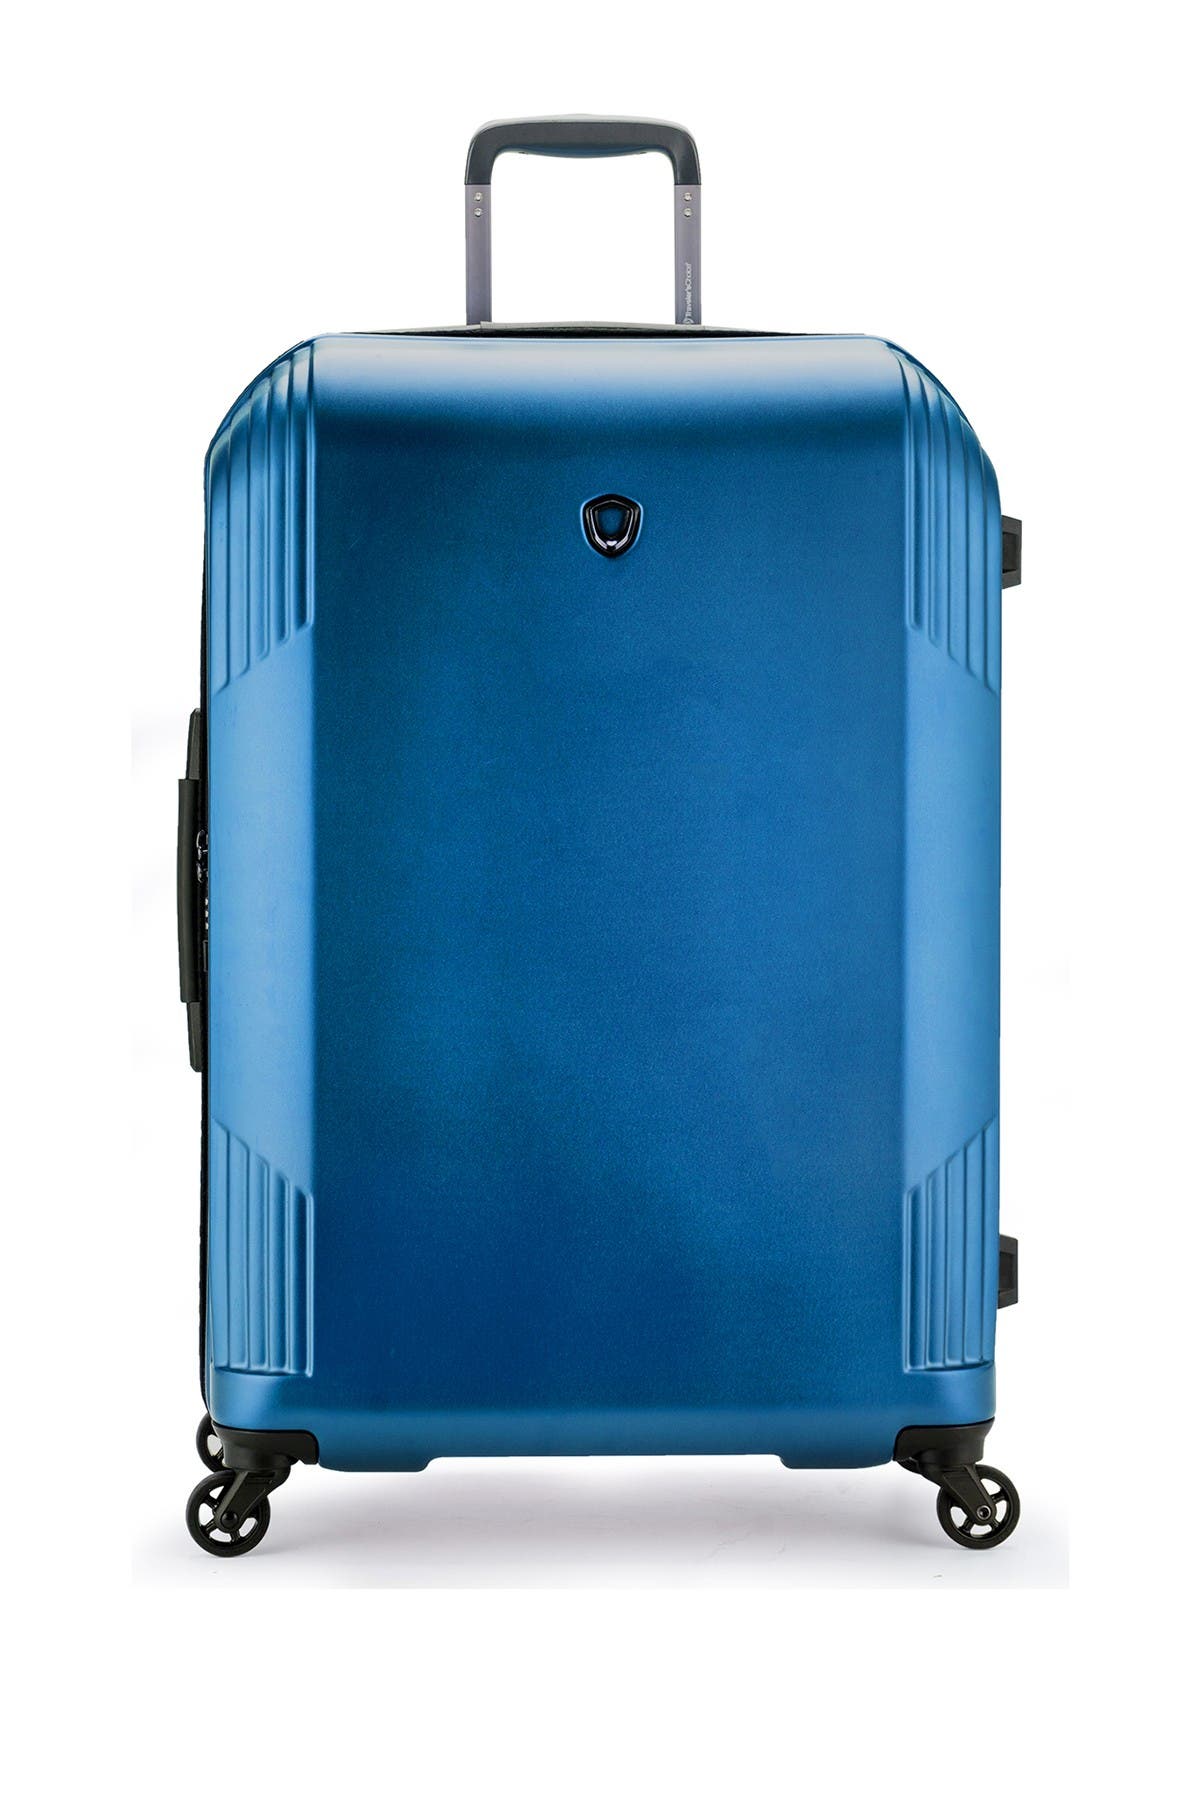 Traveler's Choice Riverside 29" Hardside Spinner Suitcase In Blue